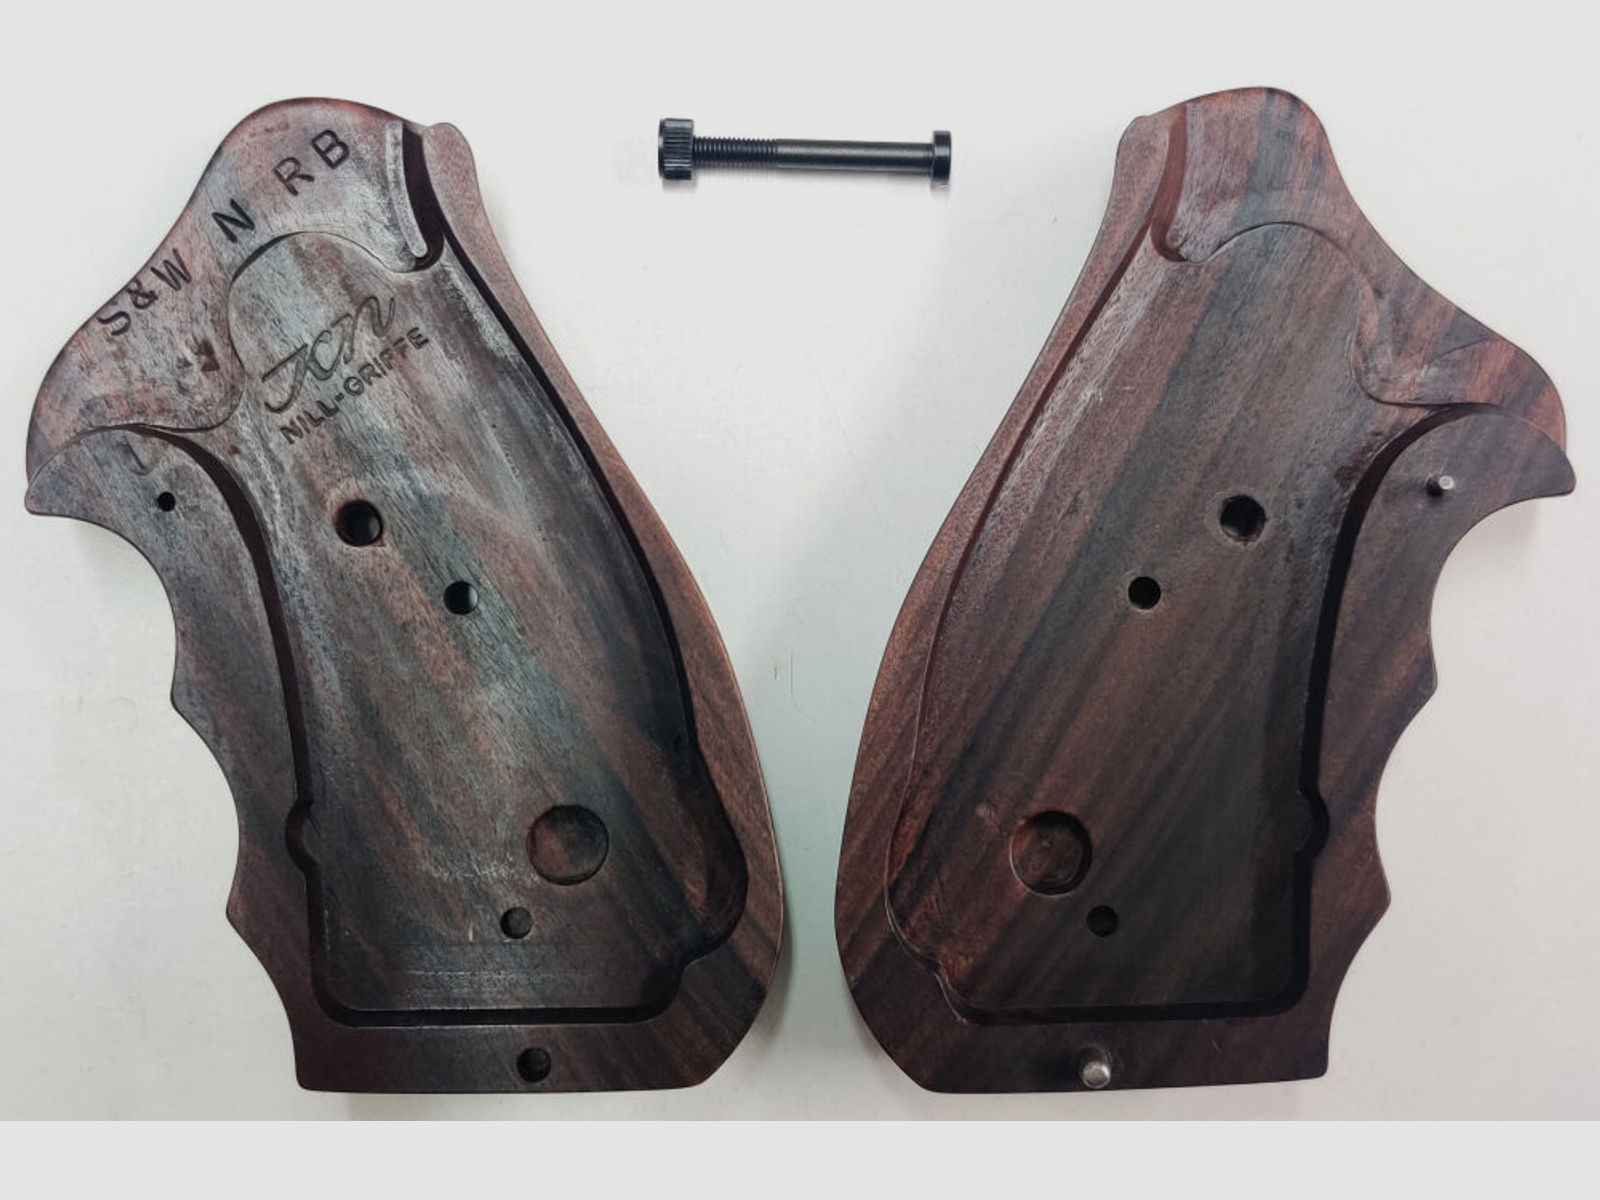 Nill Griffschalen angepasst für AMADEO Rossi Revolver	 Nill Griffschalen angepasst für AMADEO Rossi Revolver